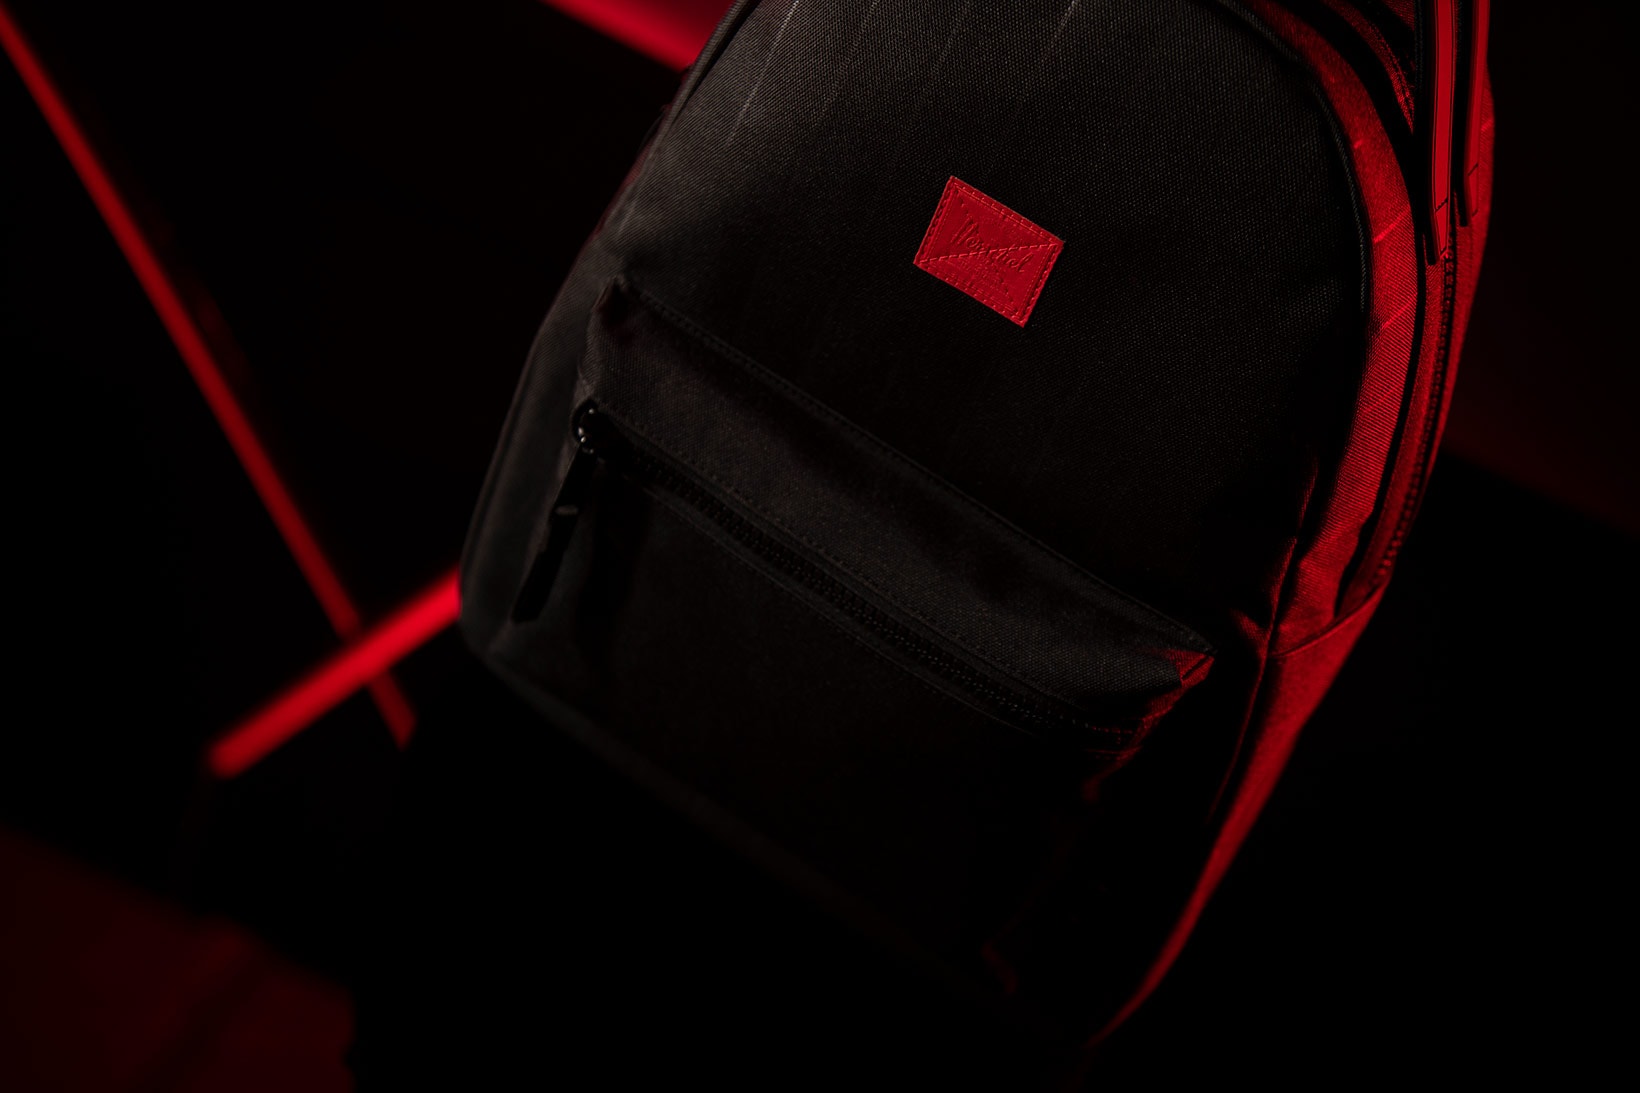 herschel supply co star wars collaboration backpacks black red